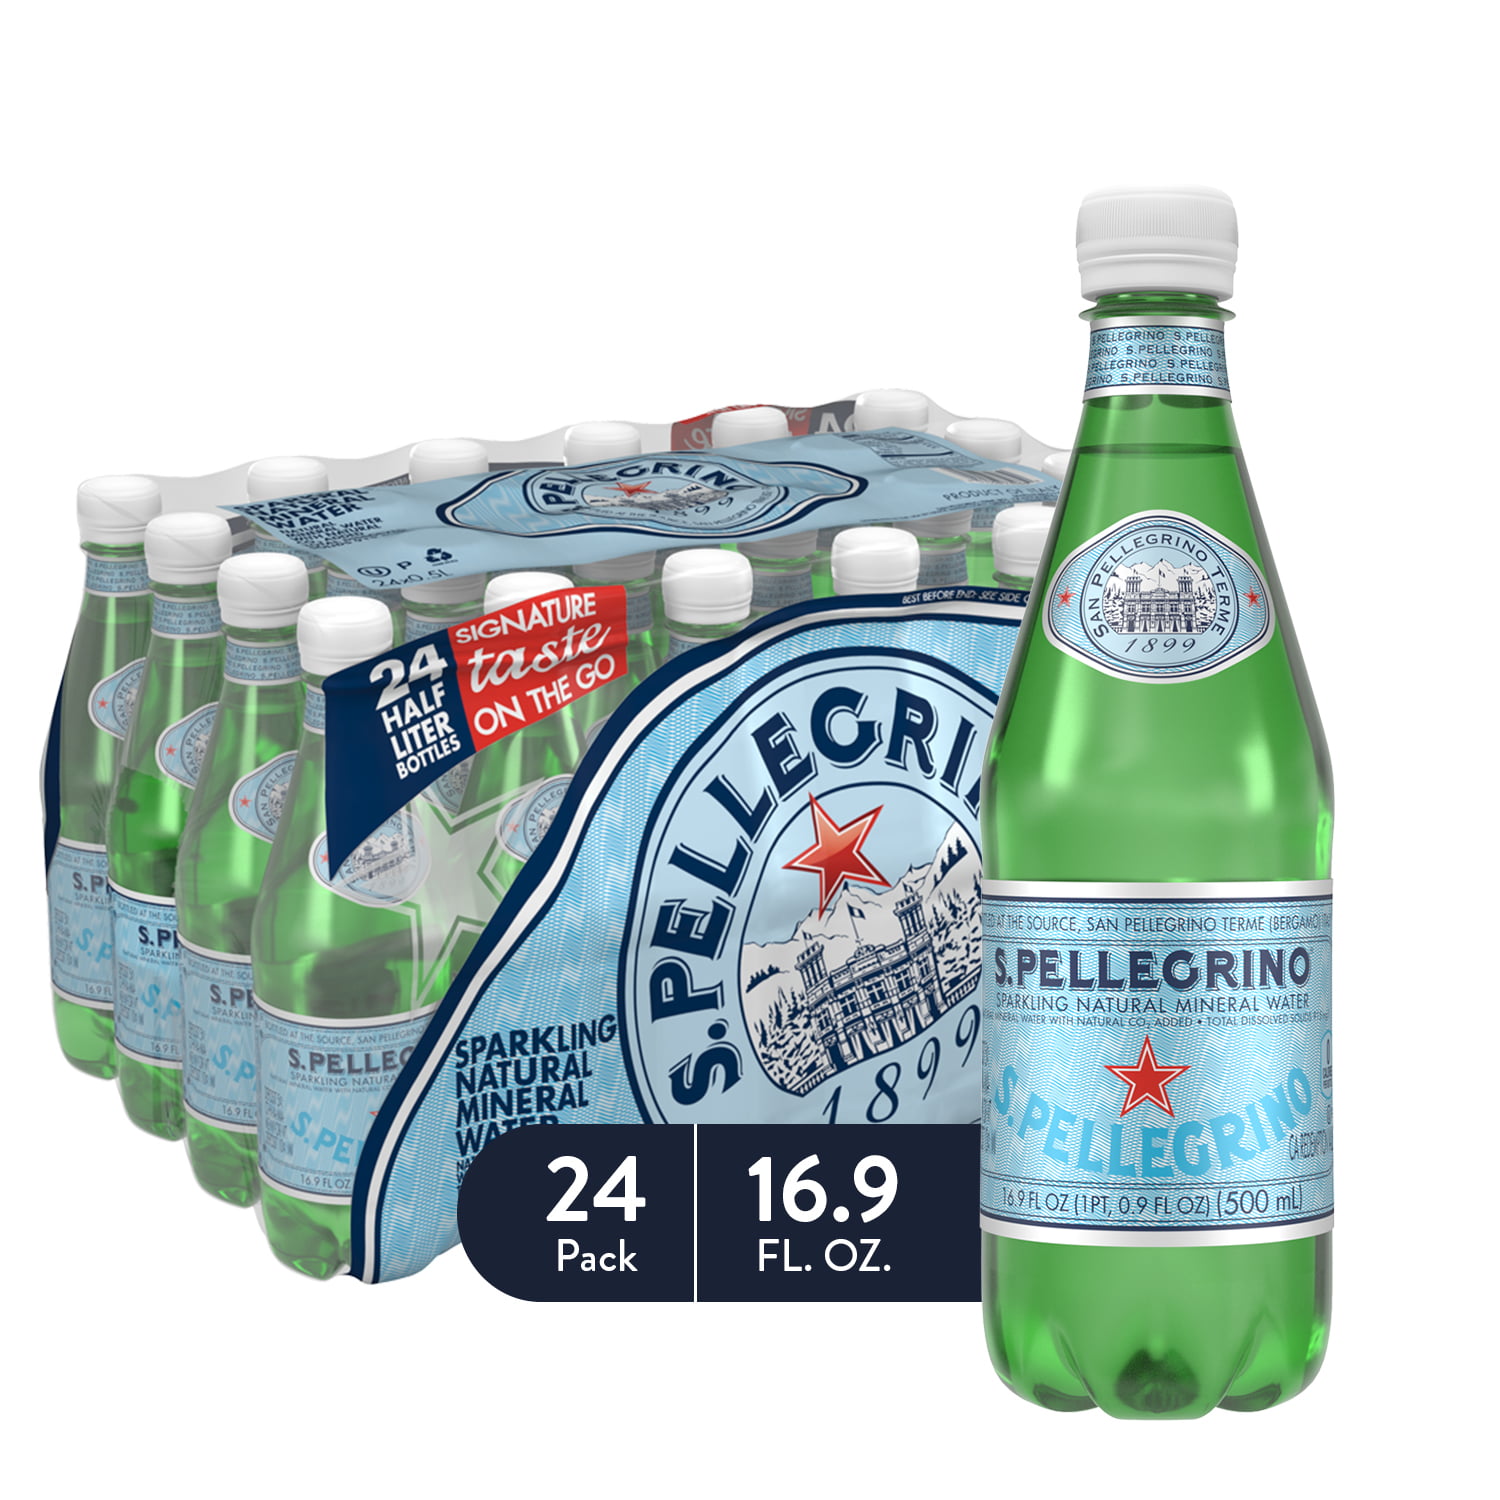 S.pellegrino Sparkling Natural Mineral Water Glass Bottles 750ml